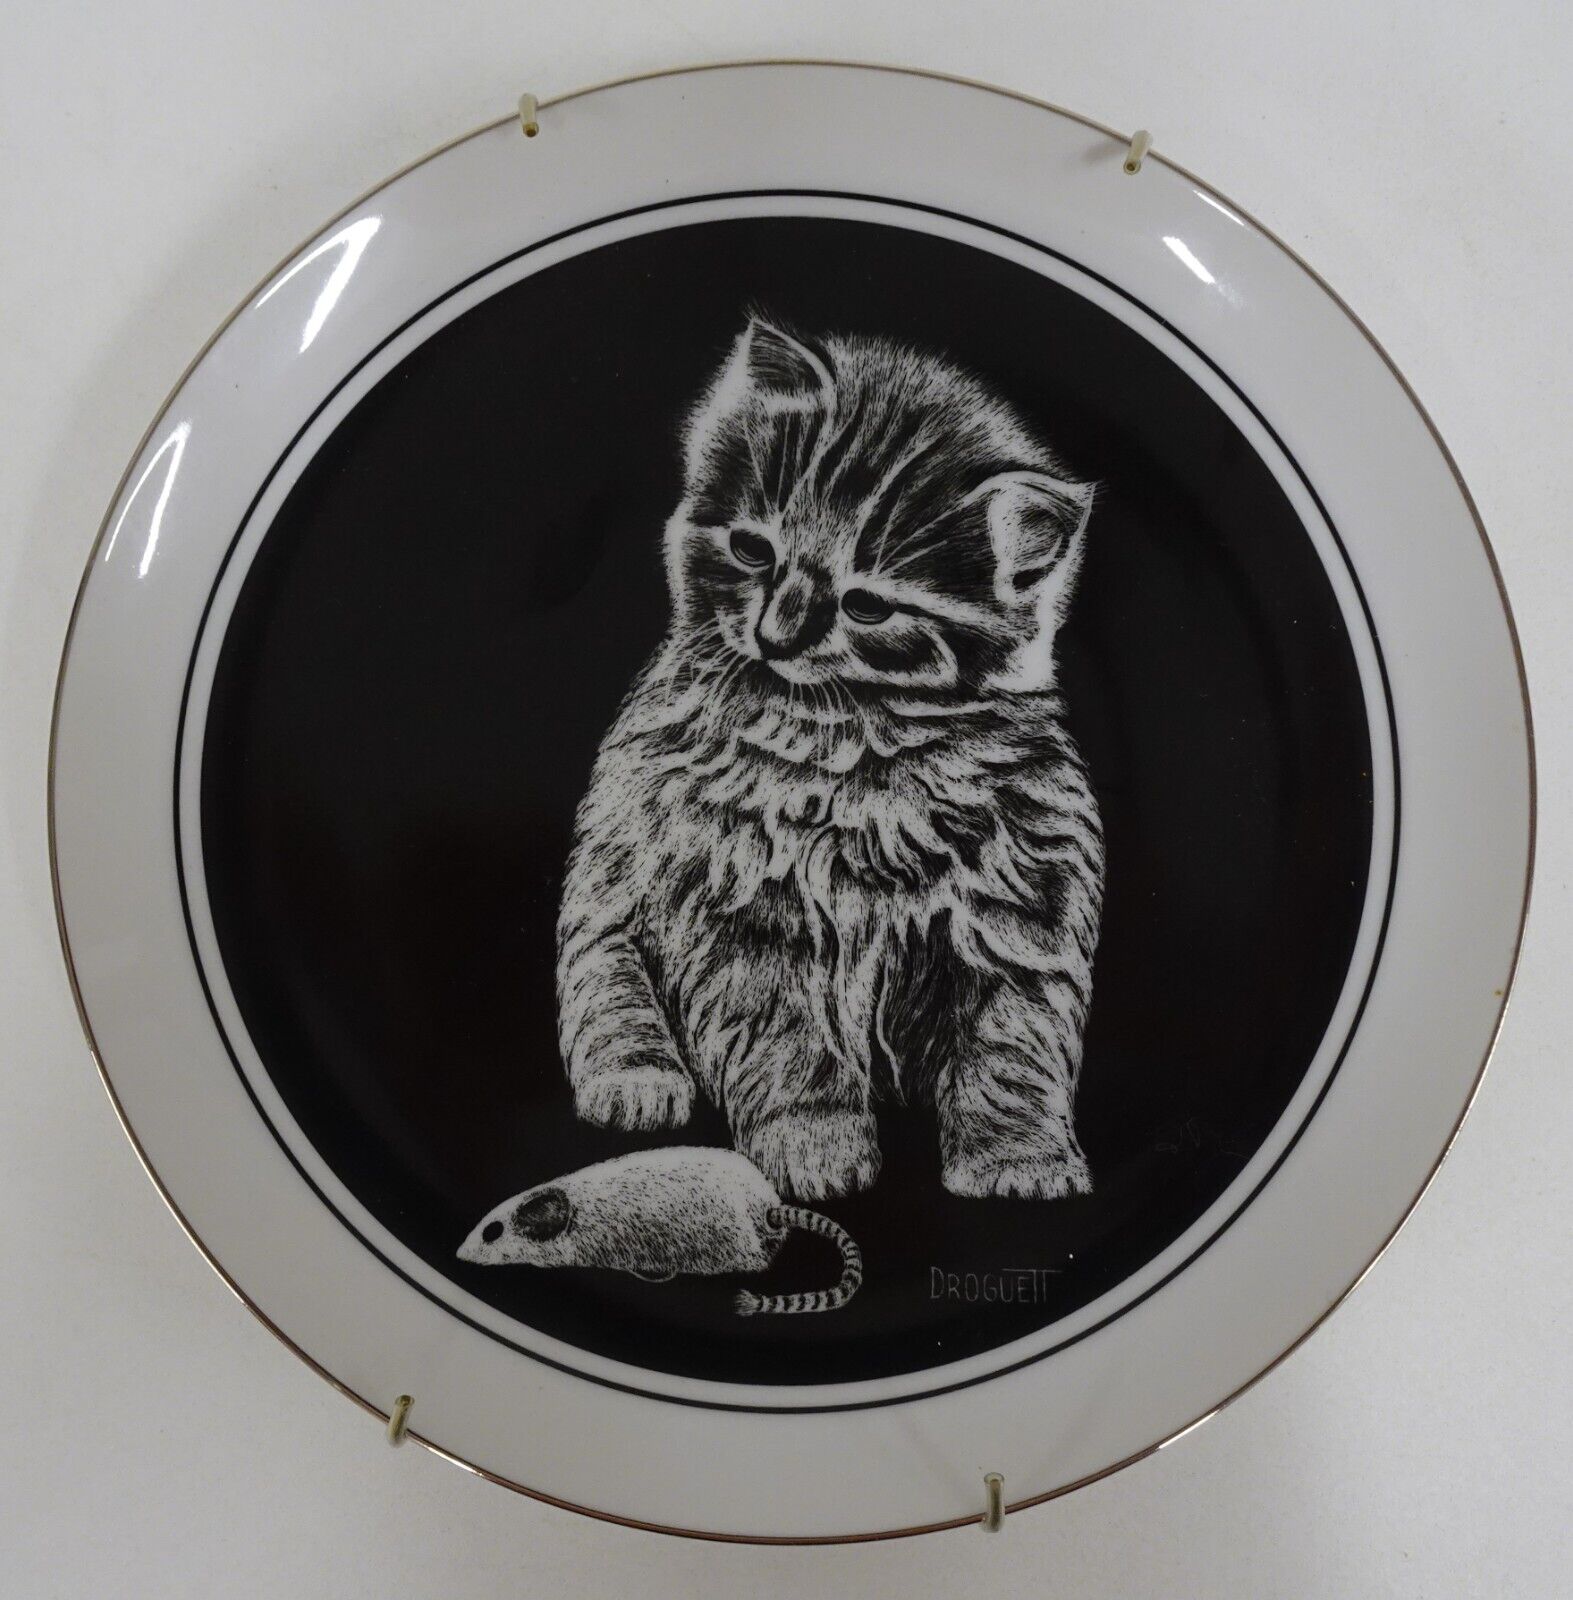 Lot 4 Kitten\'s World Royal Cornwall Collector Plates Droguett 1979 #1 #3 #4 #5